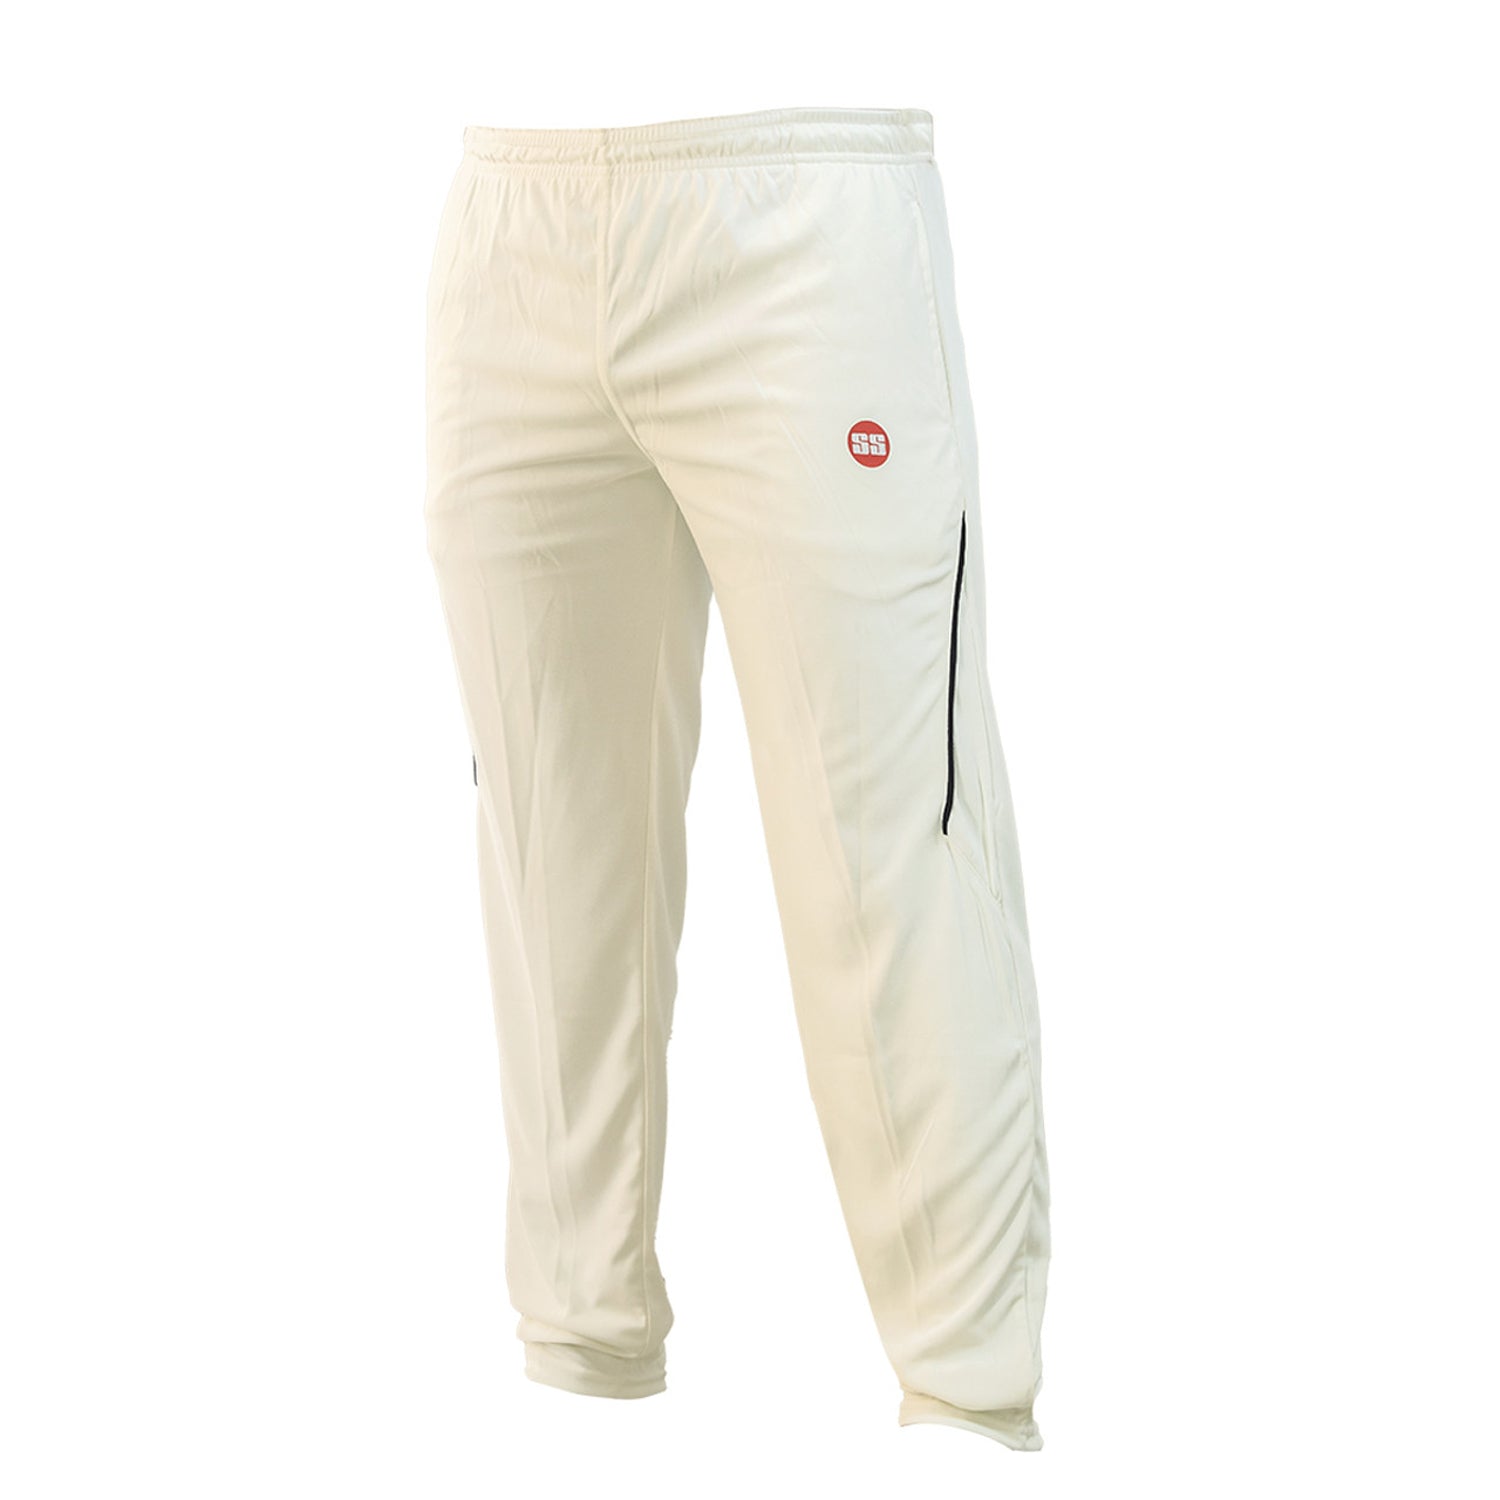 GrayNicolls GN10 Pro Performance Cricket  White Pant   wwwbrewingcricketcom